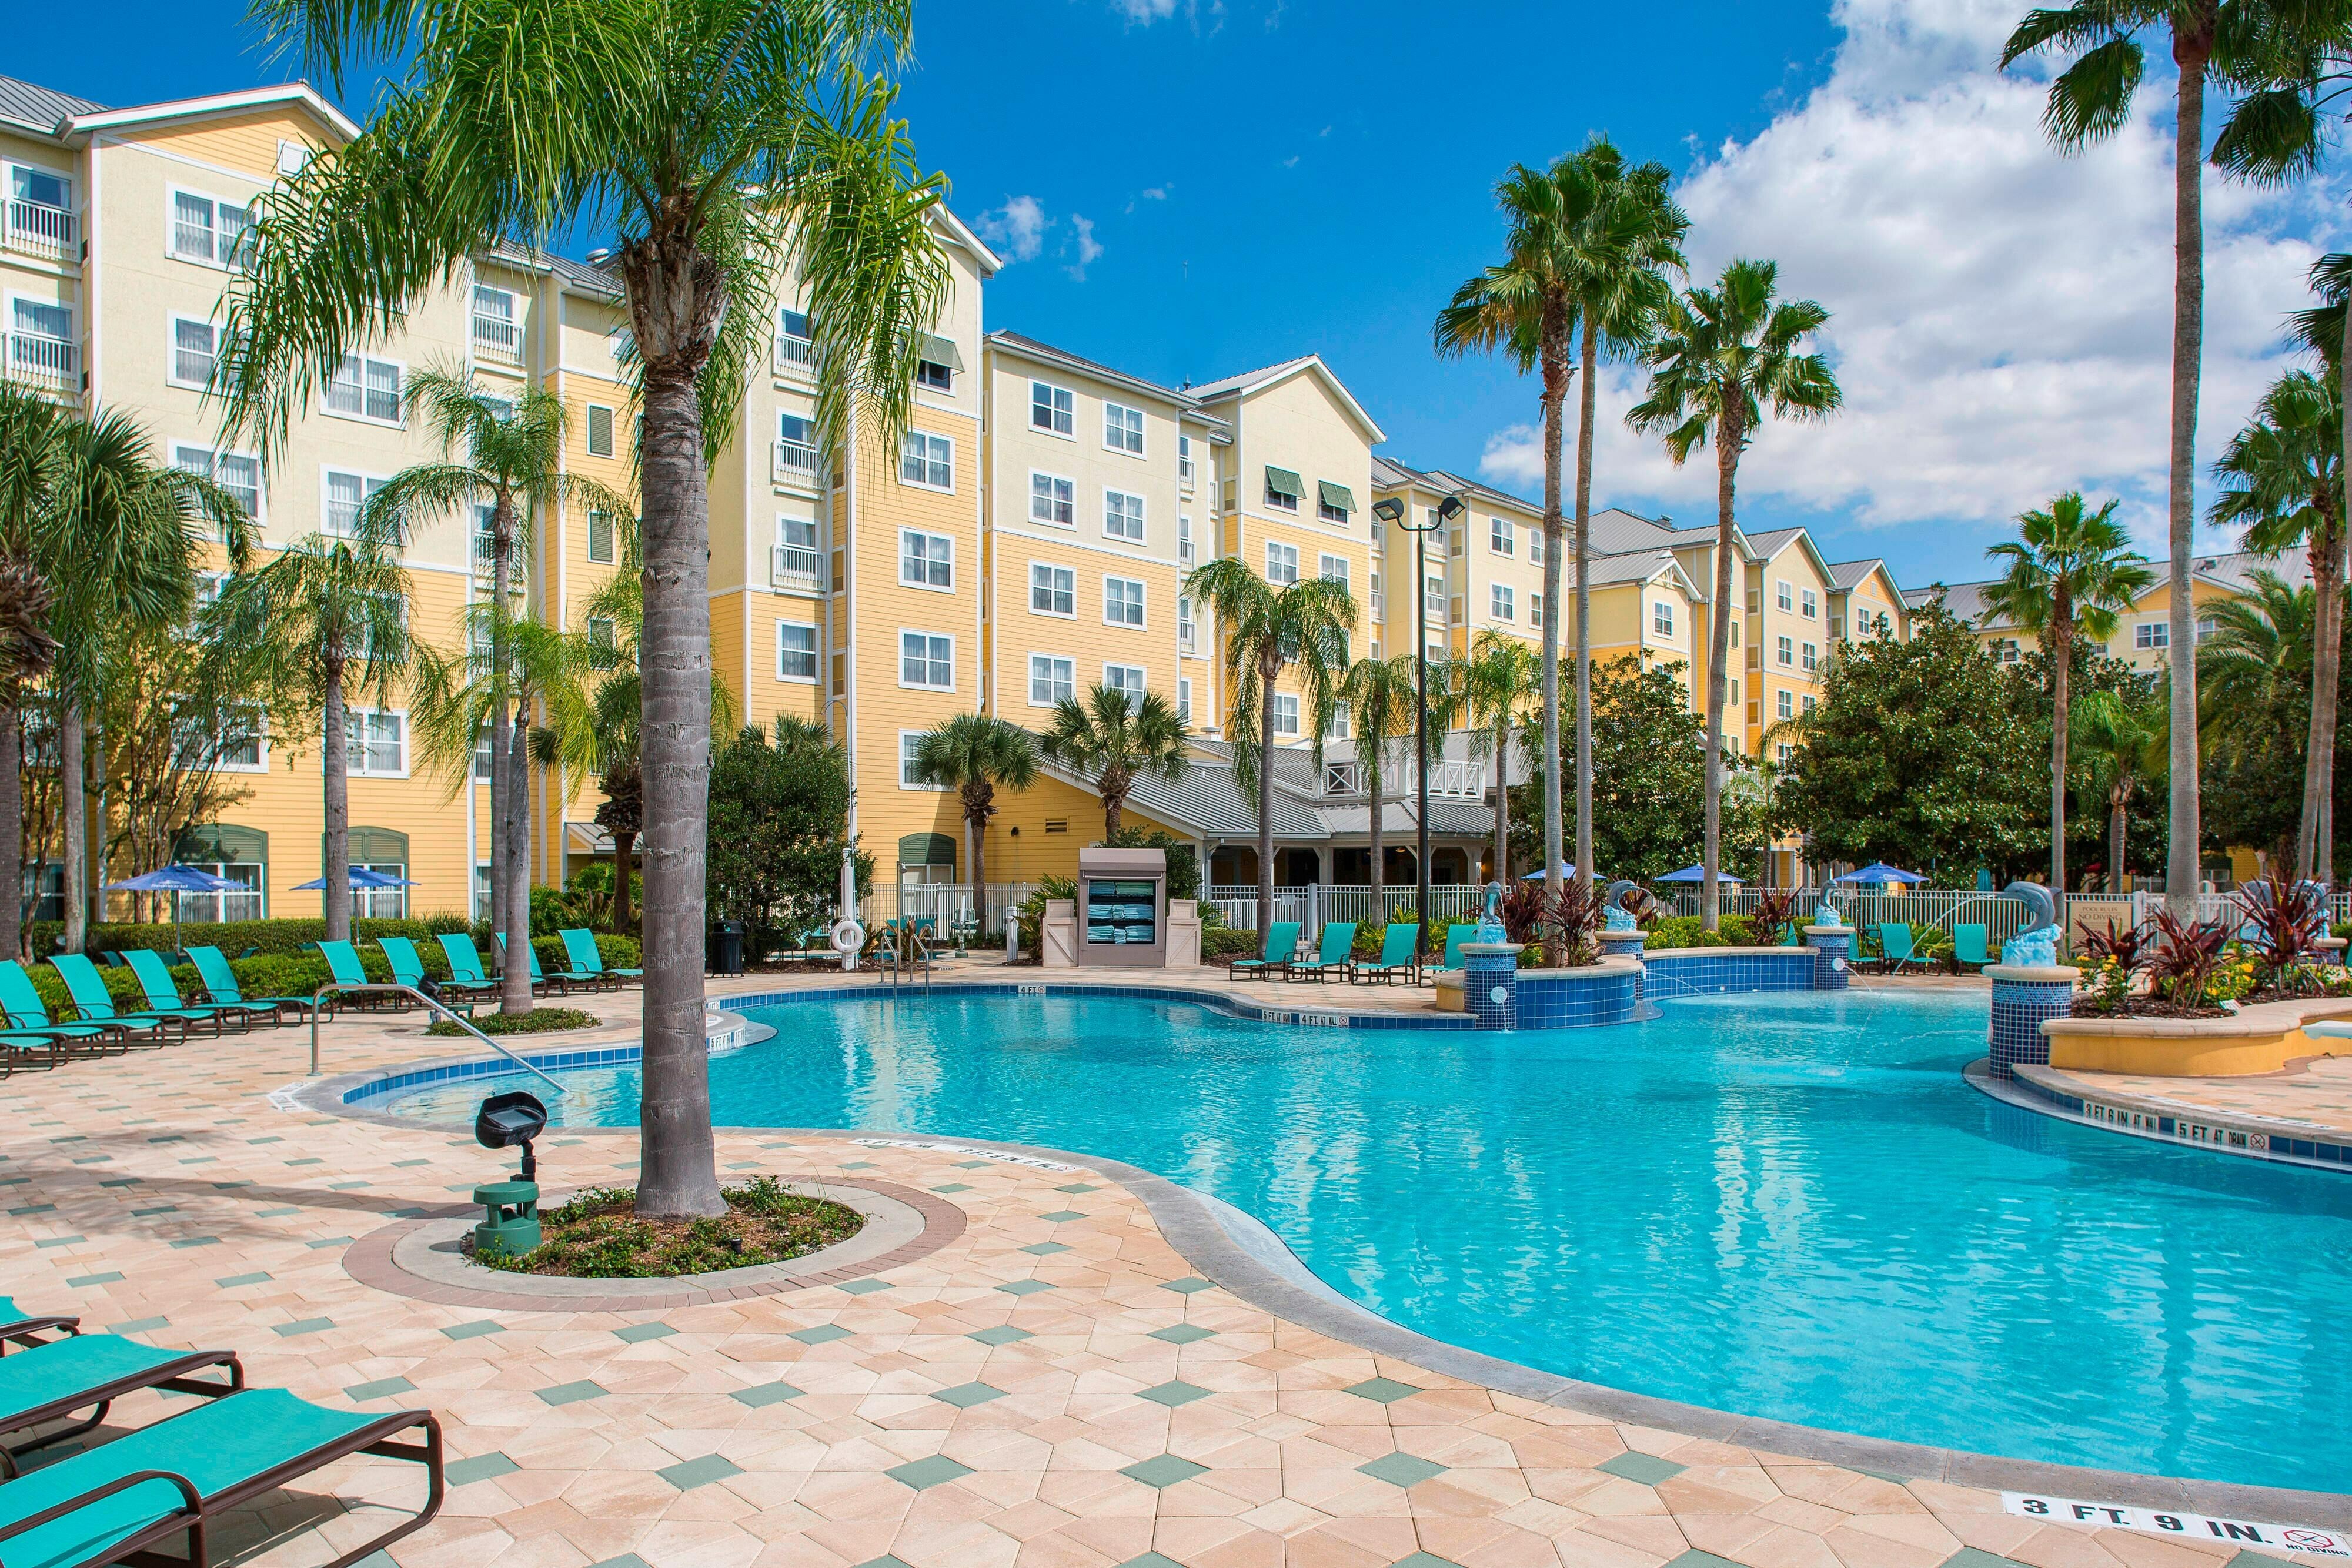 Photo of Residence Inn Orlando at SeaWorld®, Orlando, FL